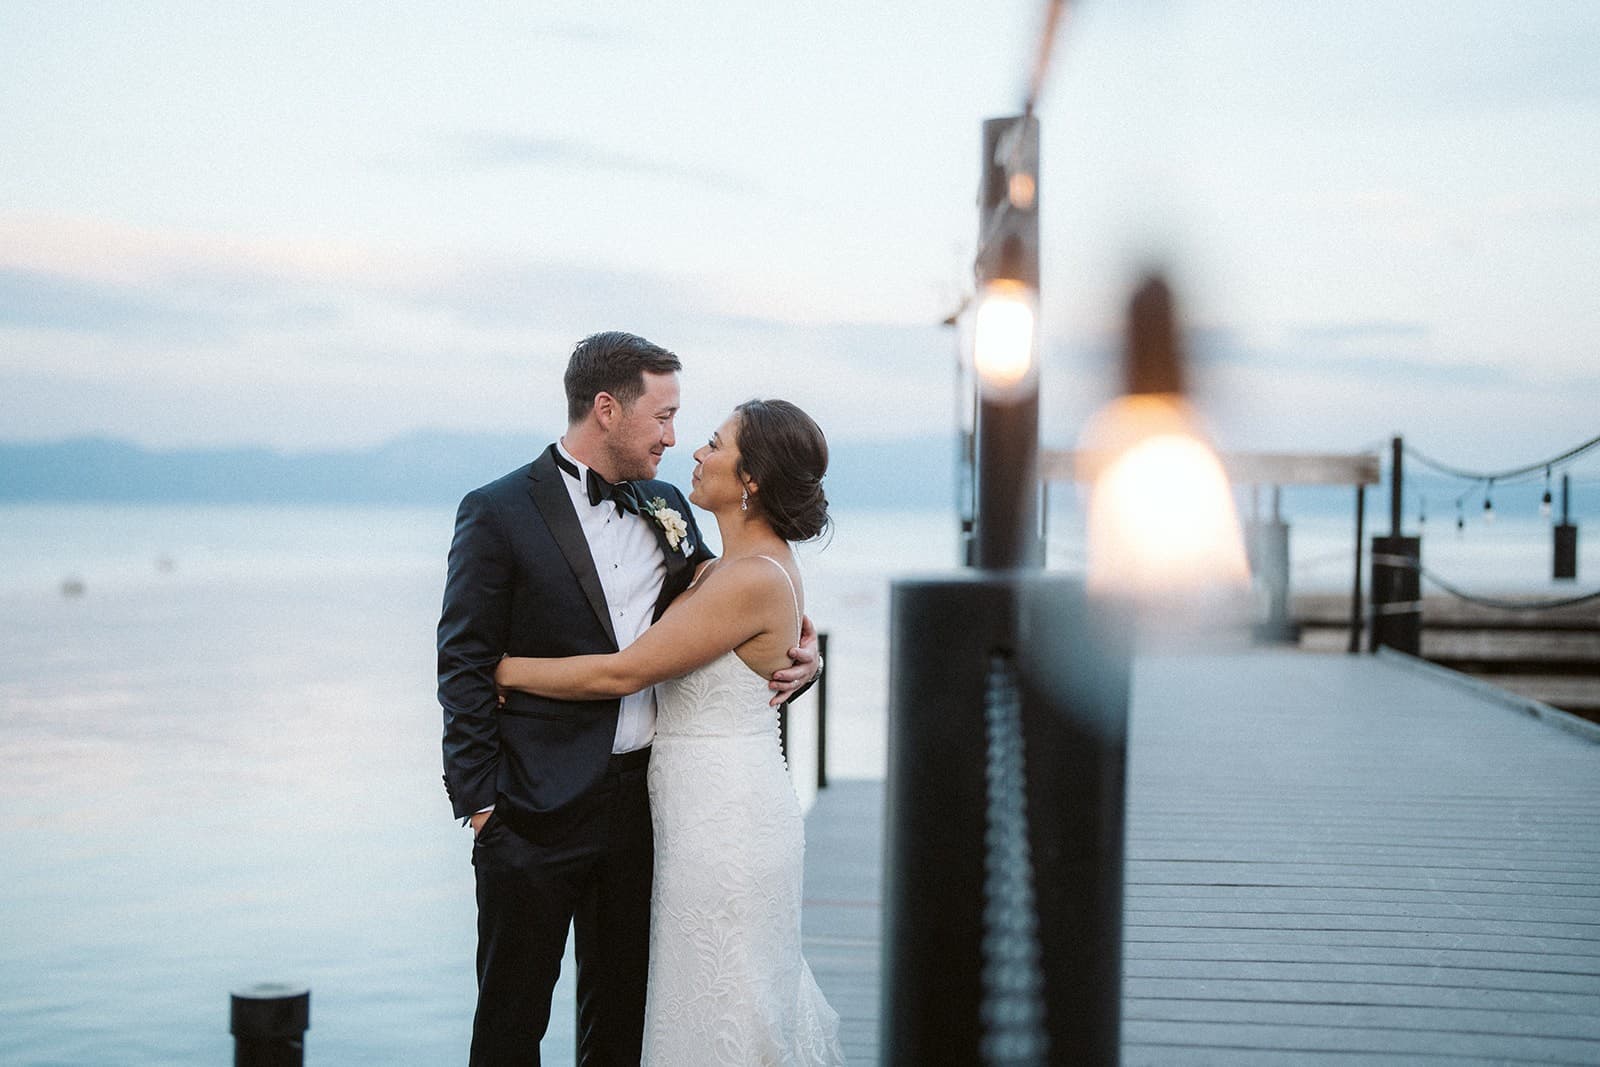 Kyle and Candice's Wedding | Sunnyside Resort | Tahoe City, CA